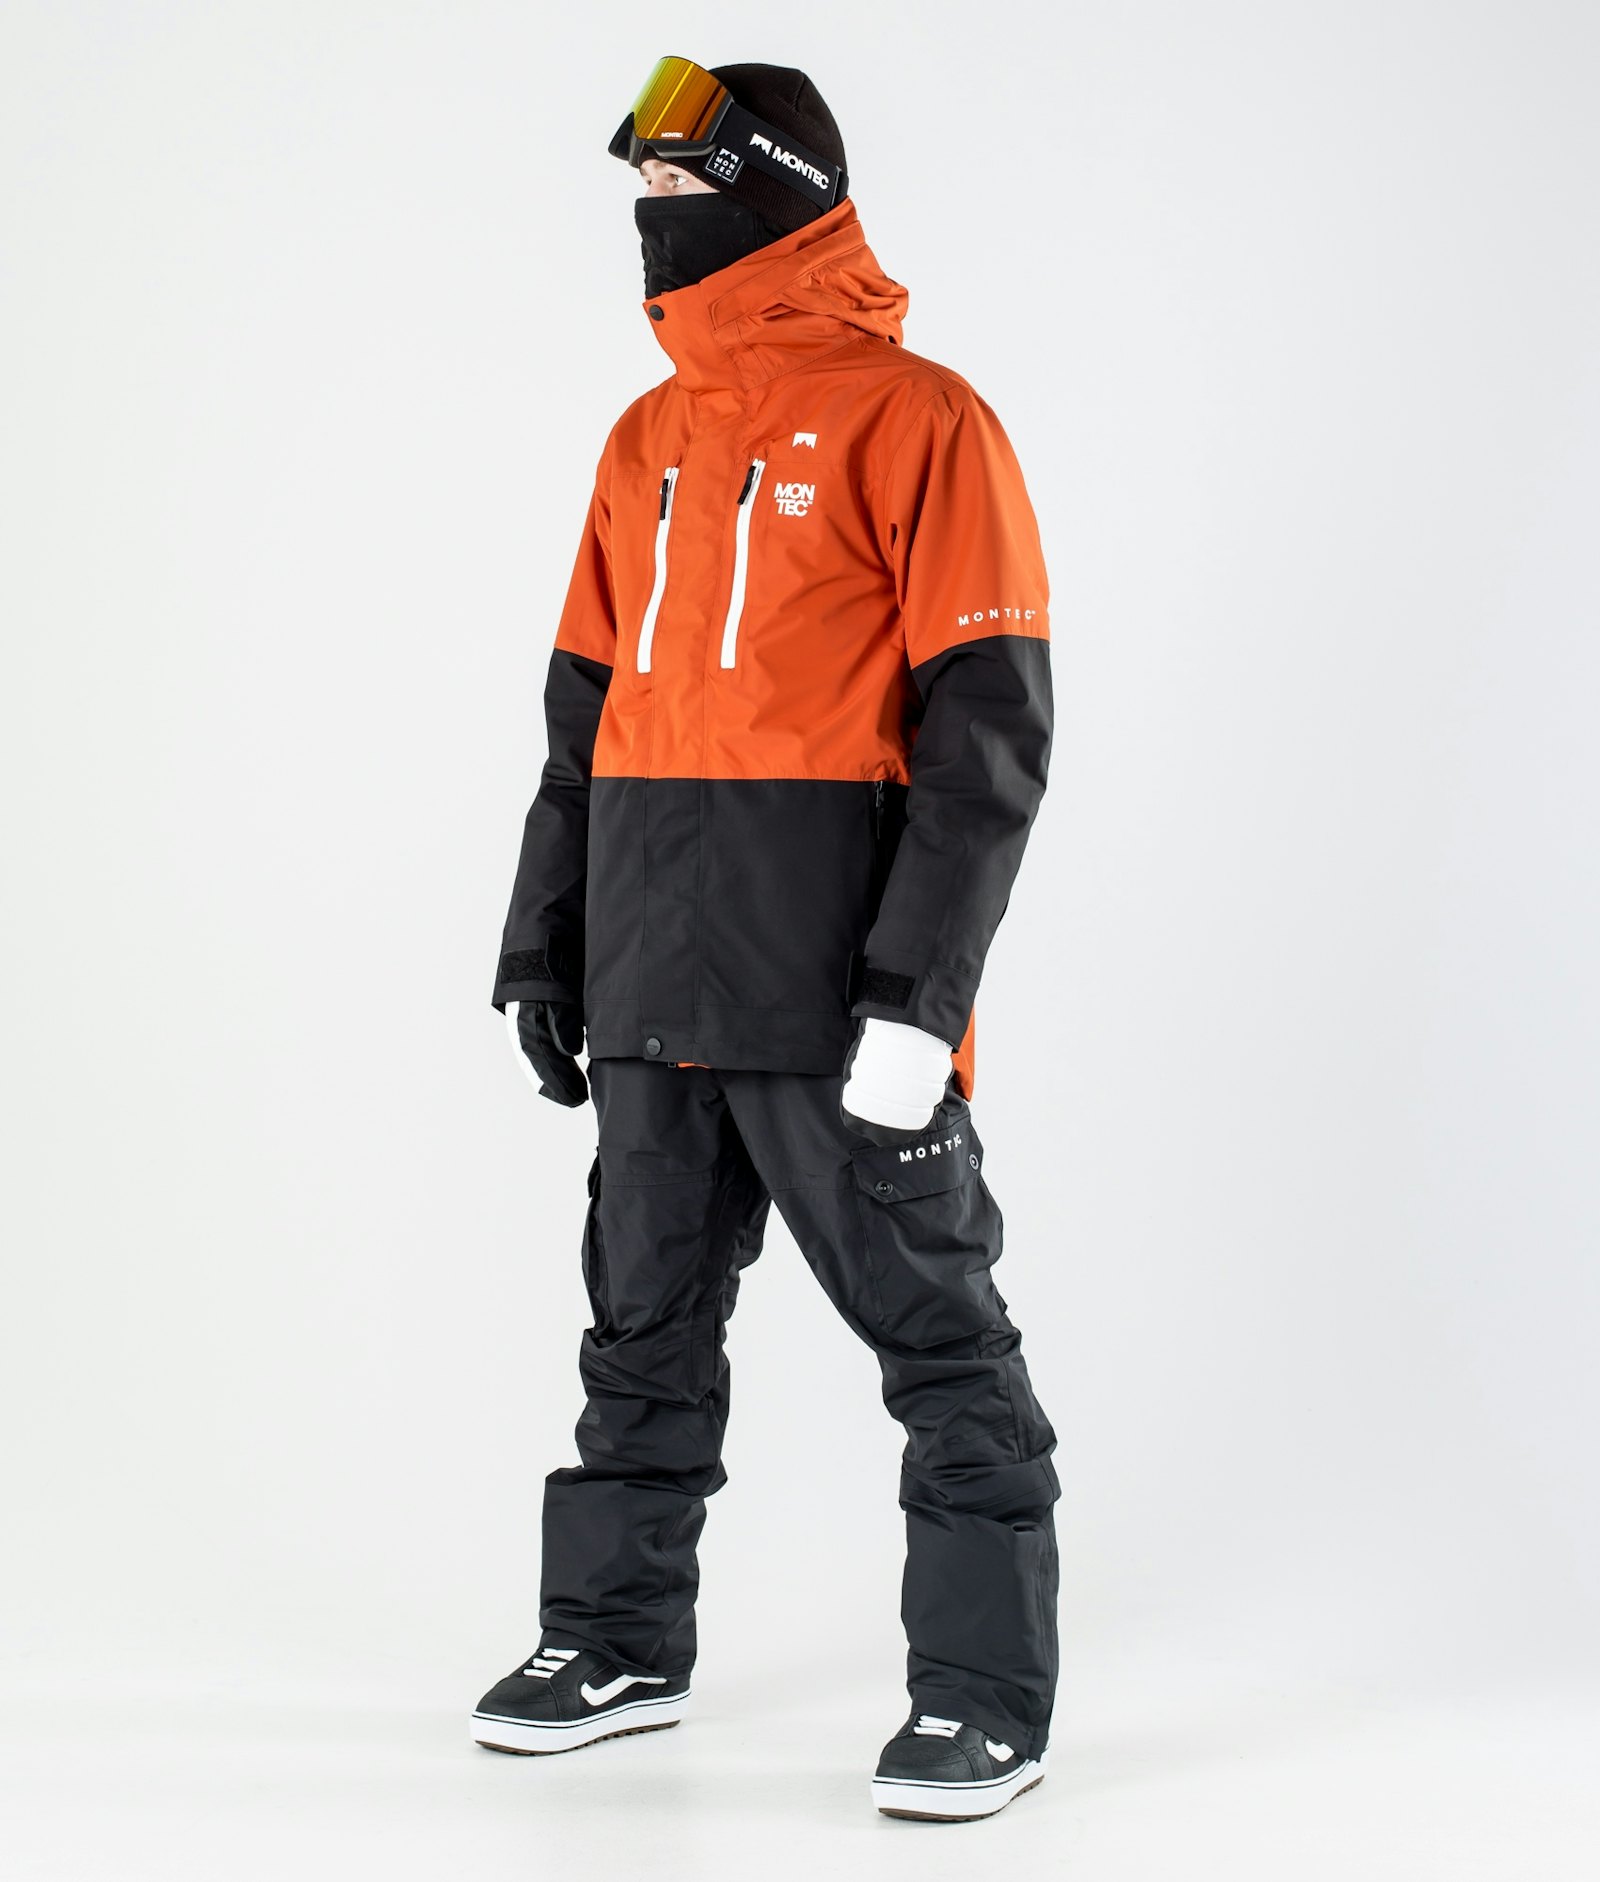 Fawk 2019 Veste Snowboard Homme Clay/Black